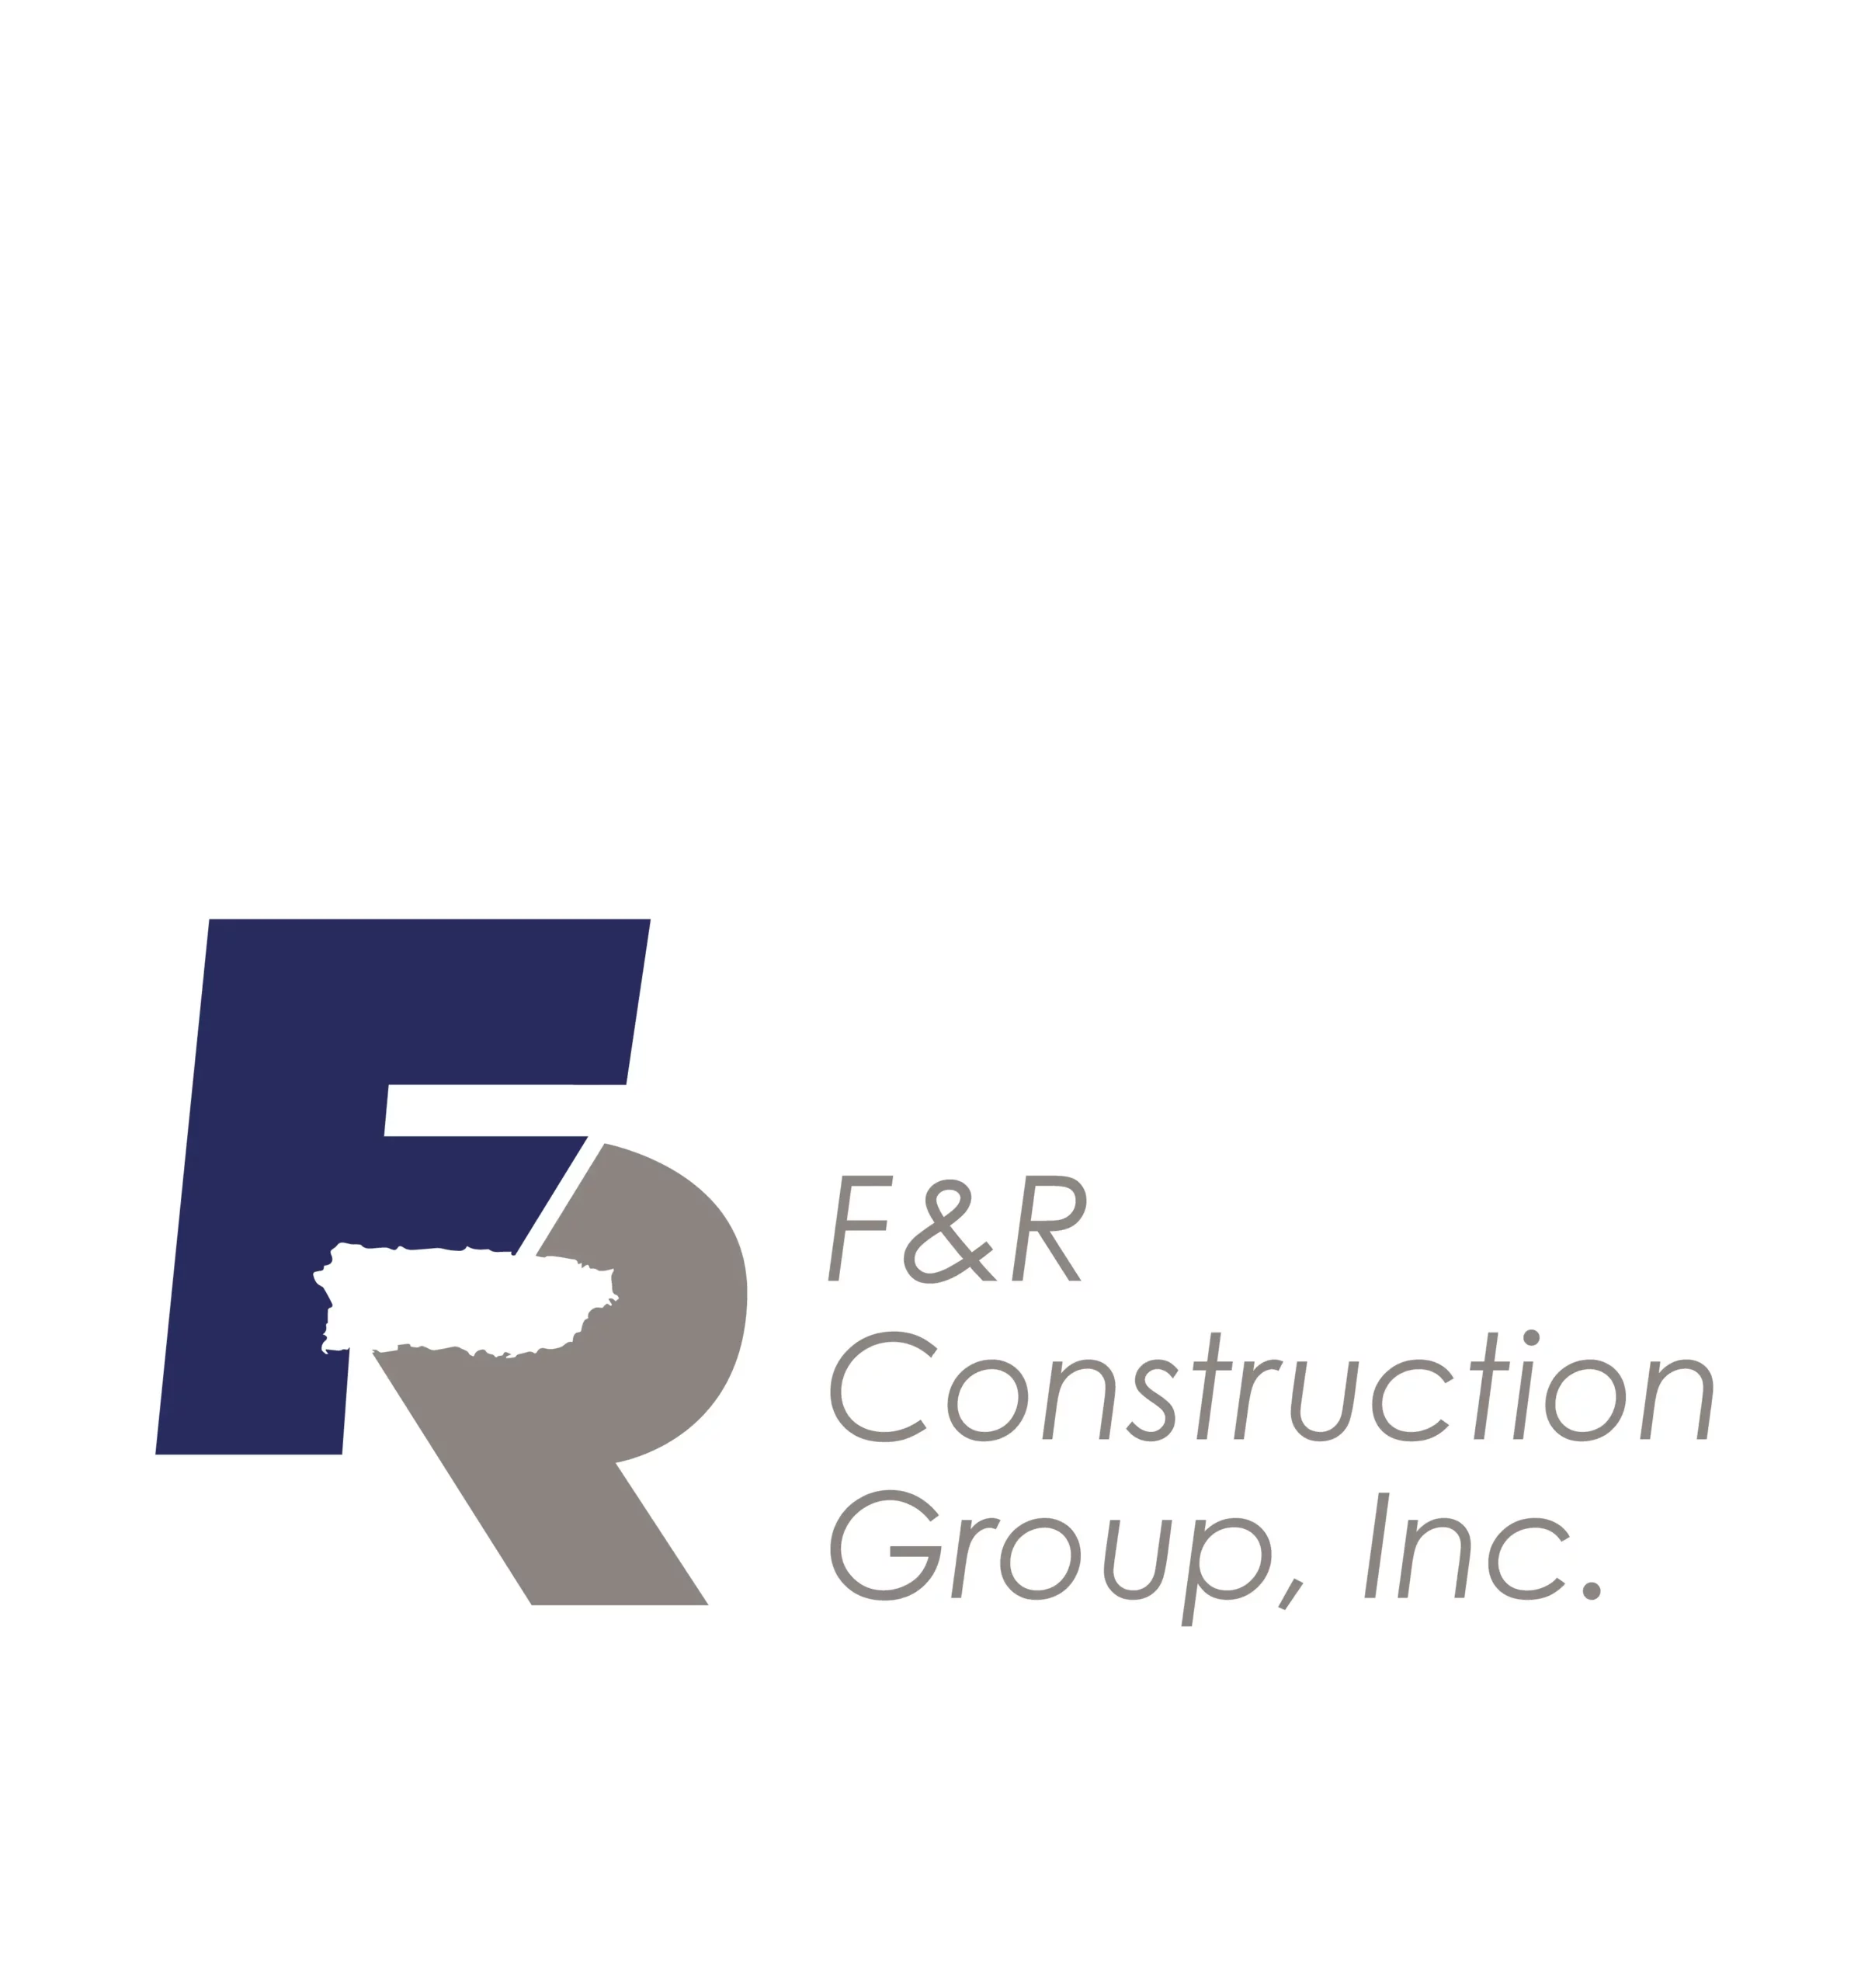 F&R Construction Group, Inc.